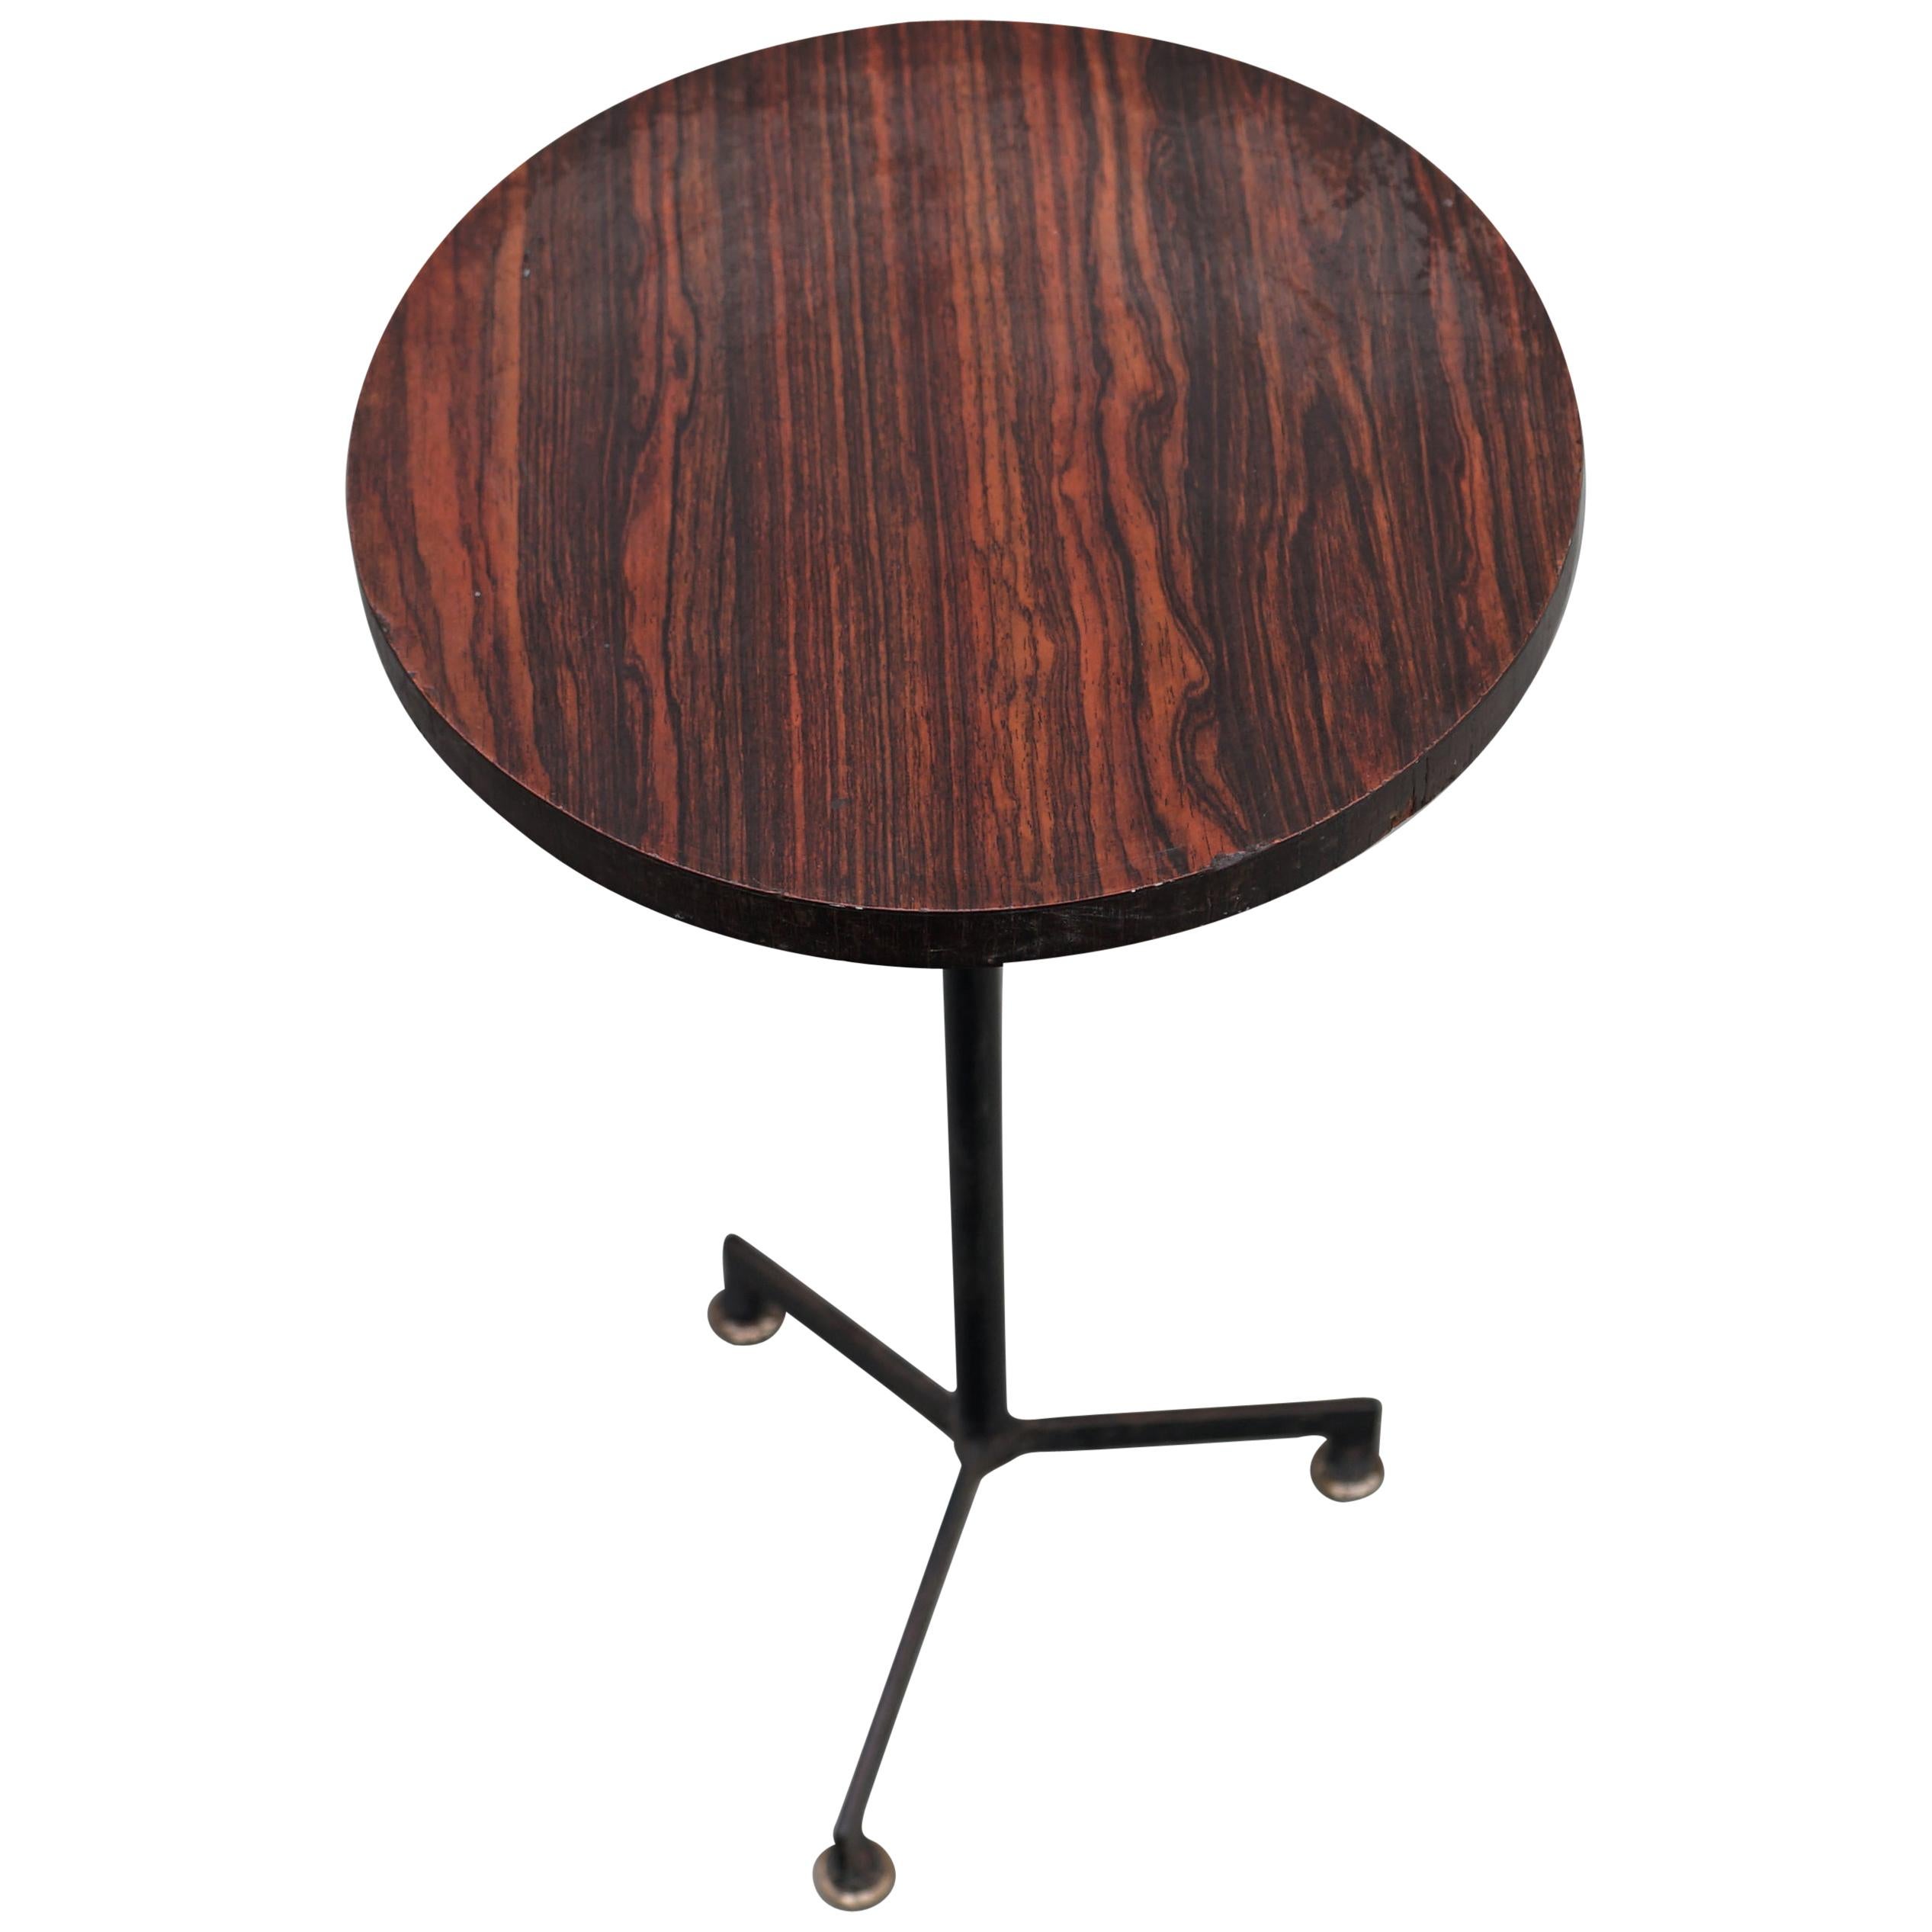 Round Side Table by Carlo Hauner and Martin Eisler, Brazilian Midcentury Design